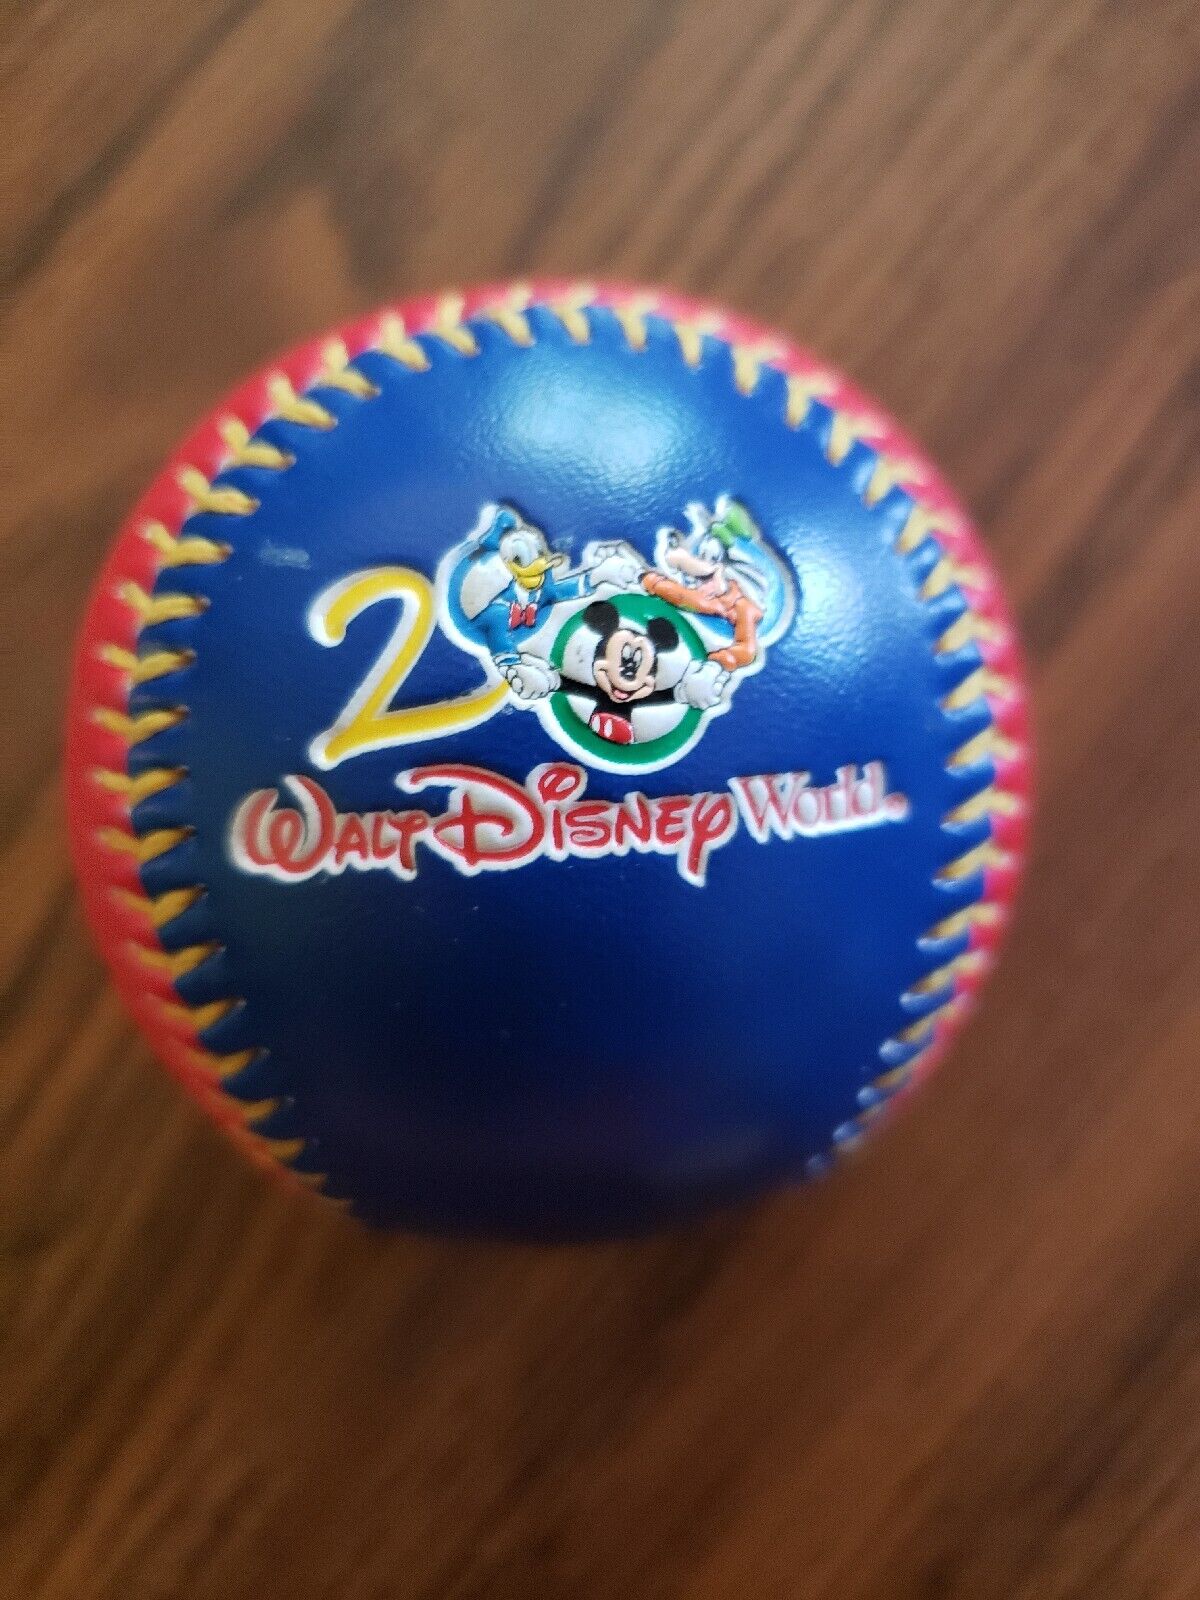 Walt Disney World - 20th Anniversary Commemorative Baseball